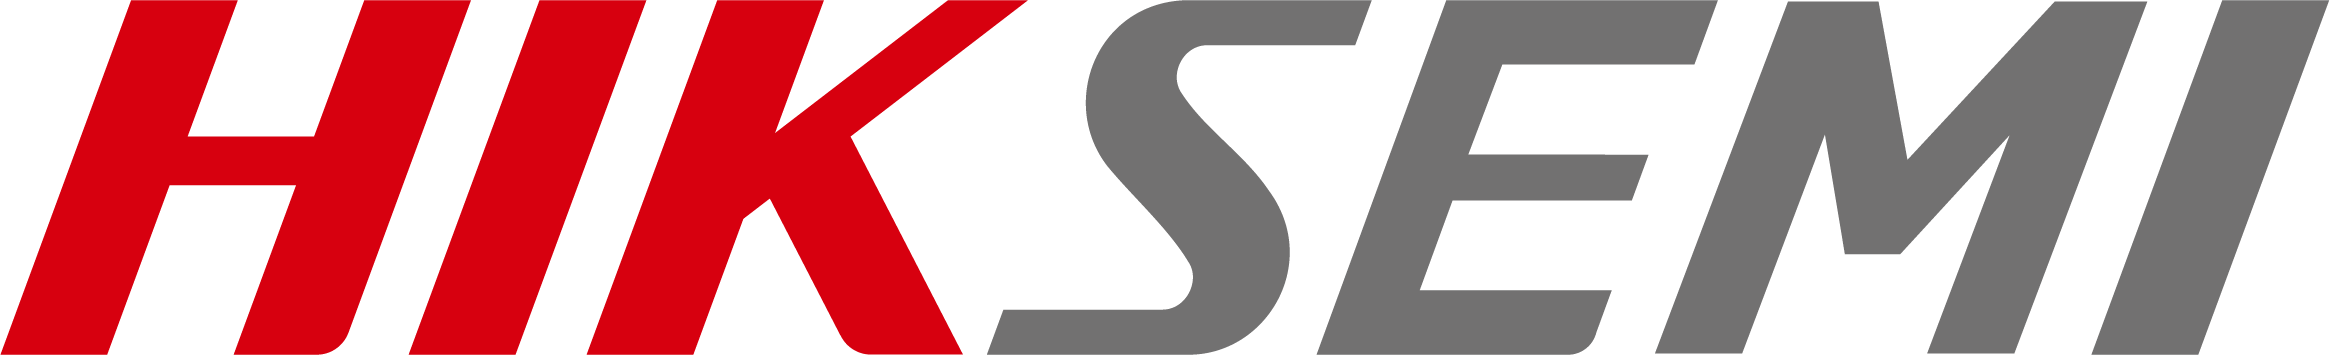 header hiksemi logo